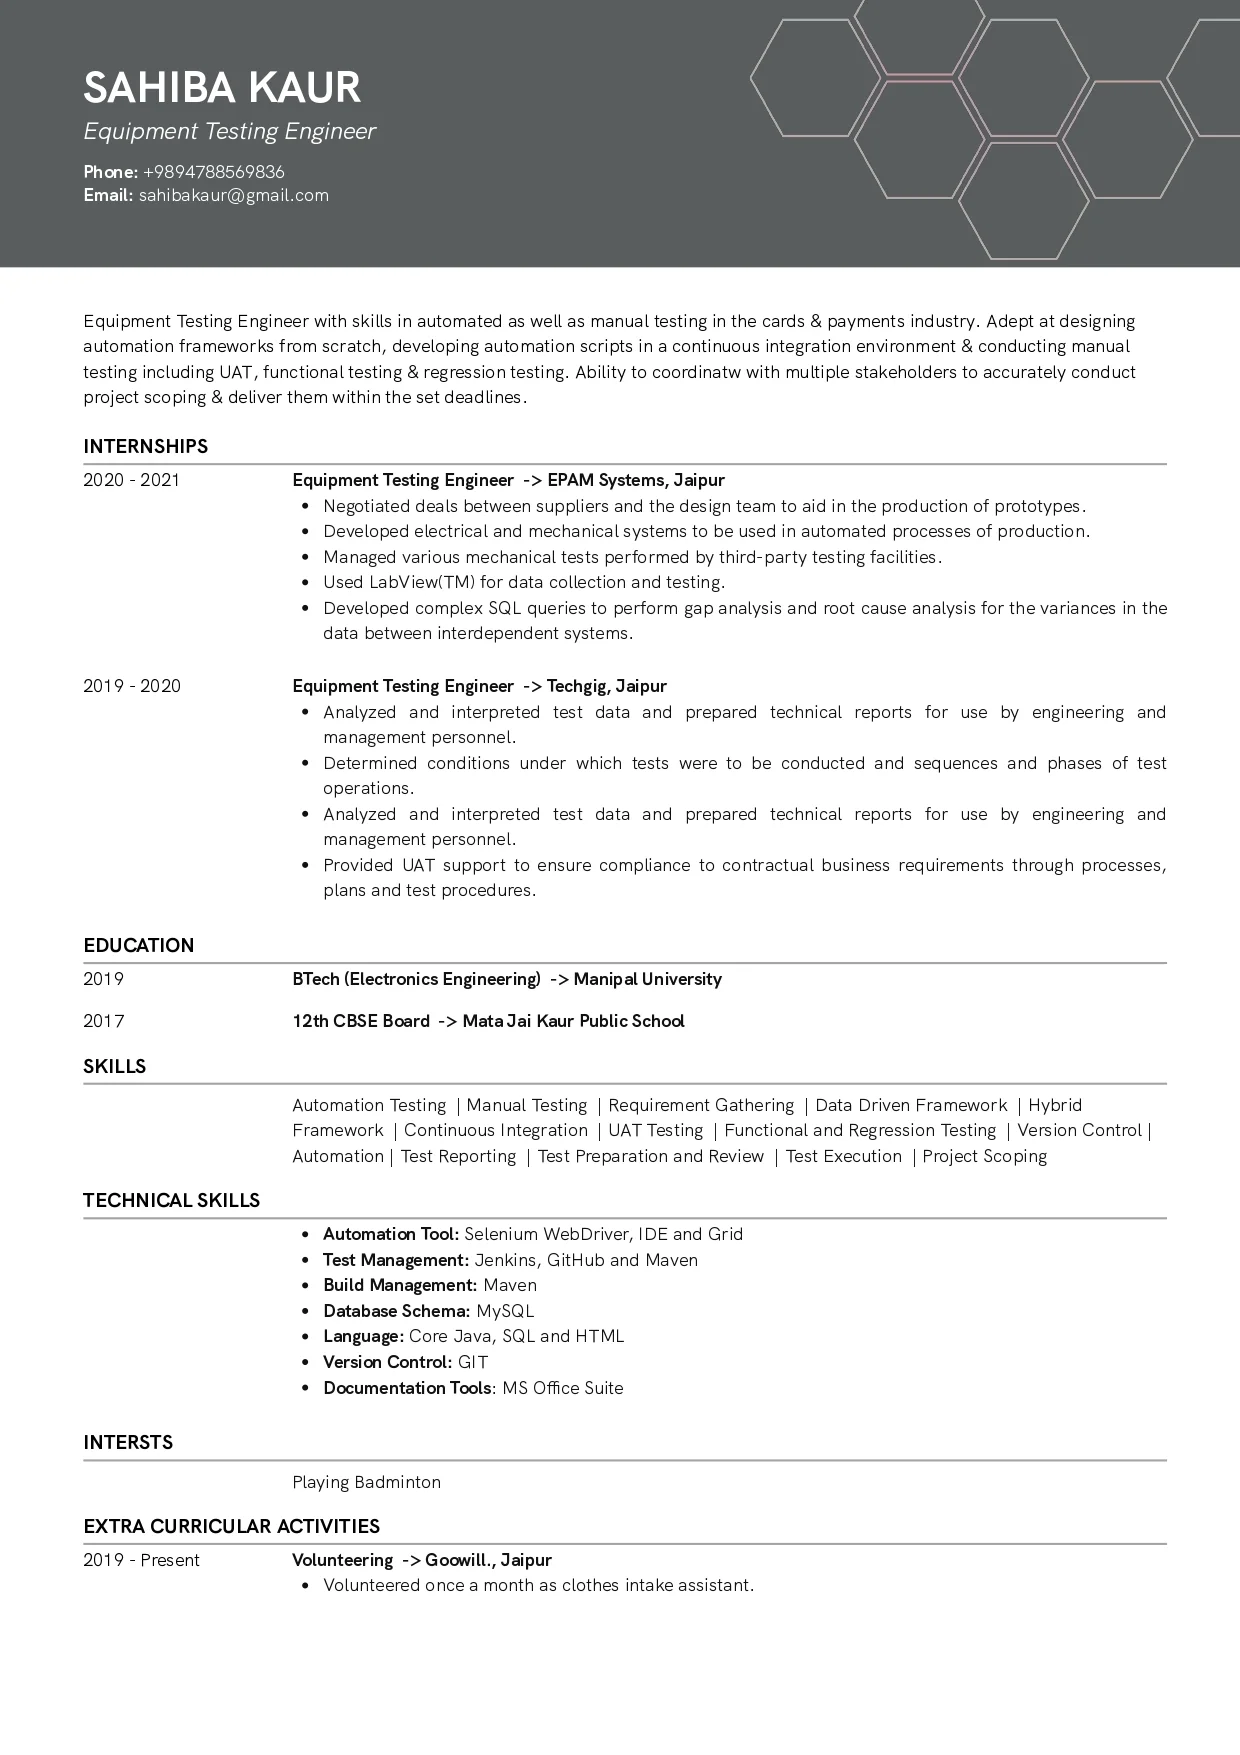 Sample Resume of Equipment Testing Engineer | Free Resume Templates & Samples on Resumod.co